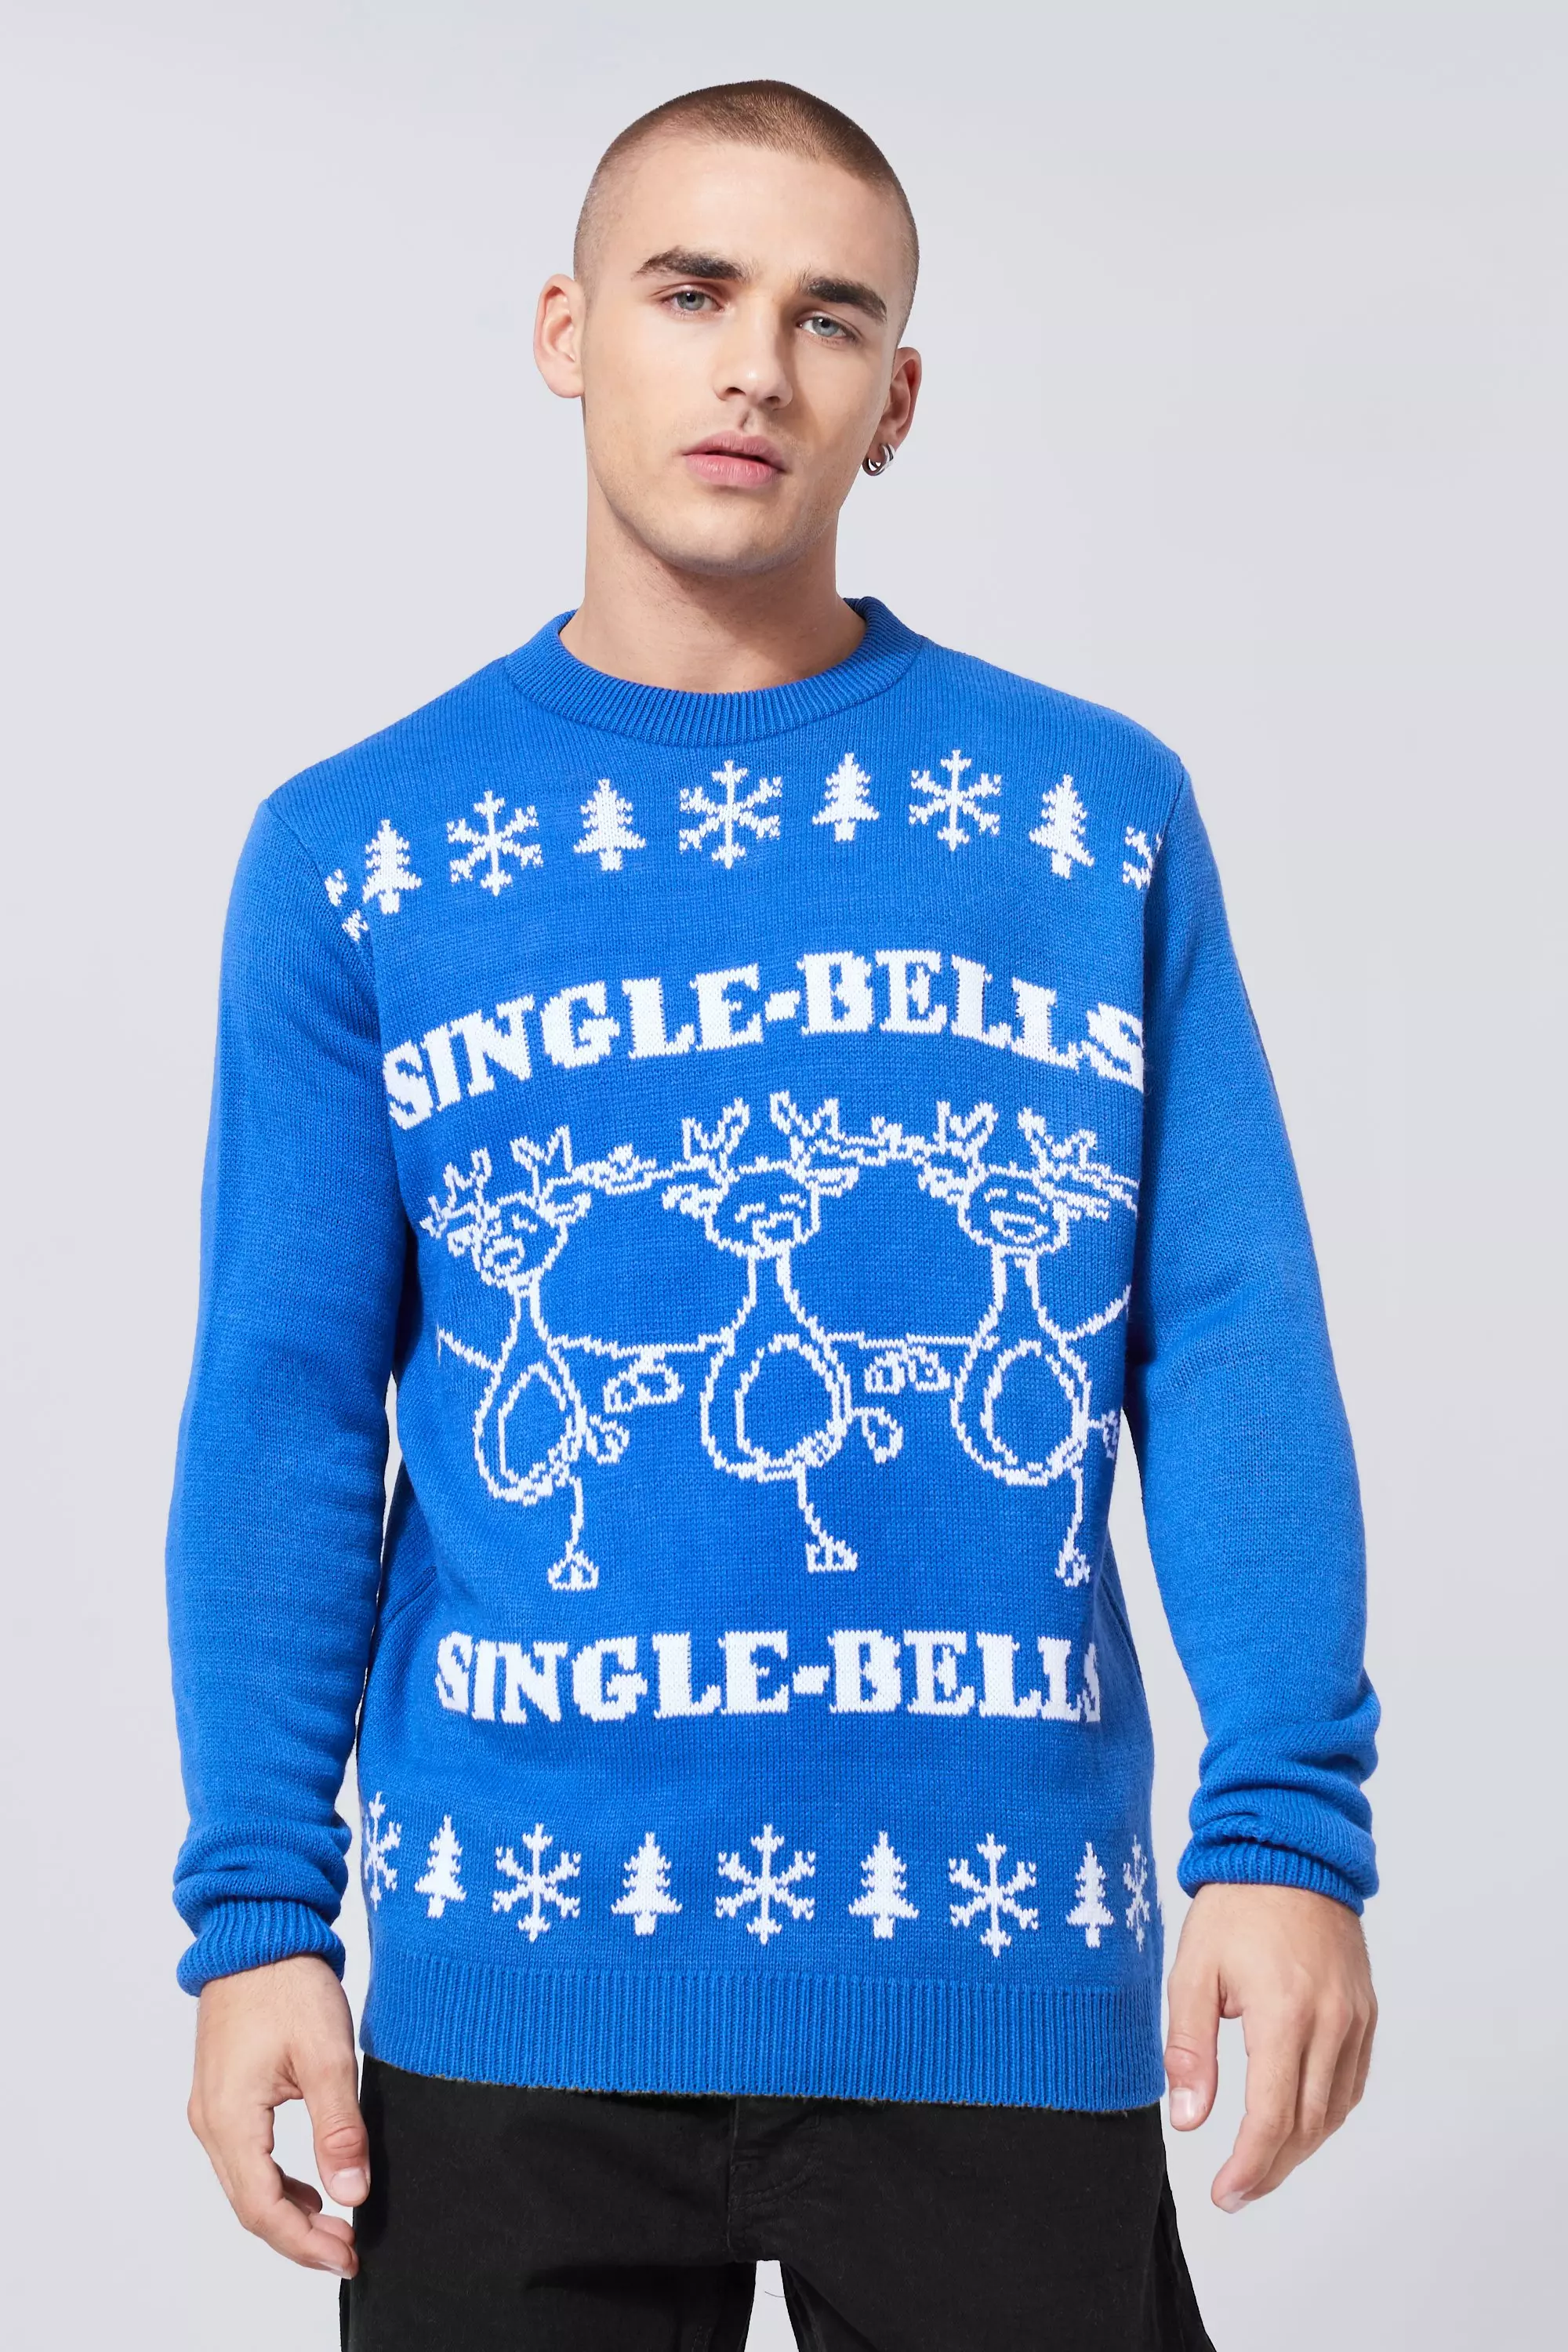 Single Bells Christmas Sweater Navy